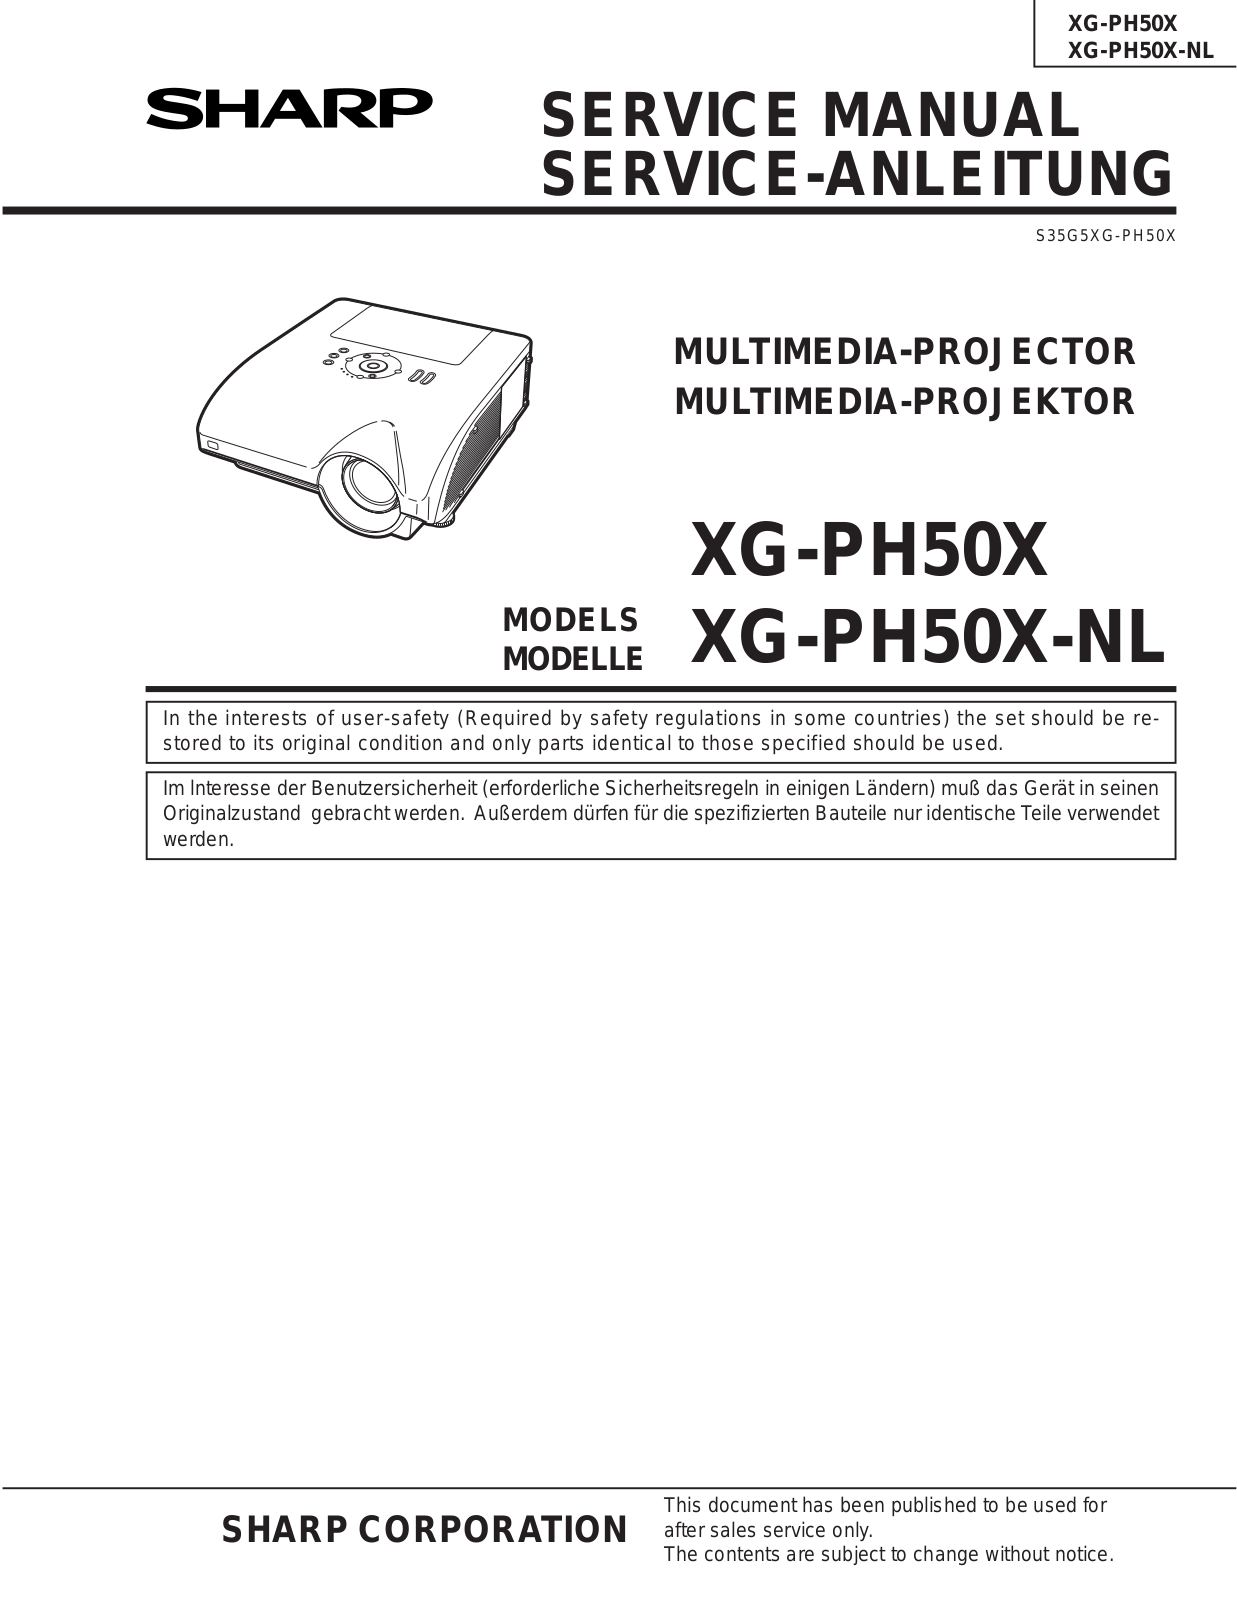 Sharp XGPH50X, XG-PH50X-NL Service Manual